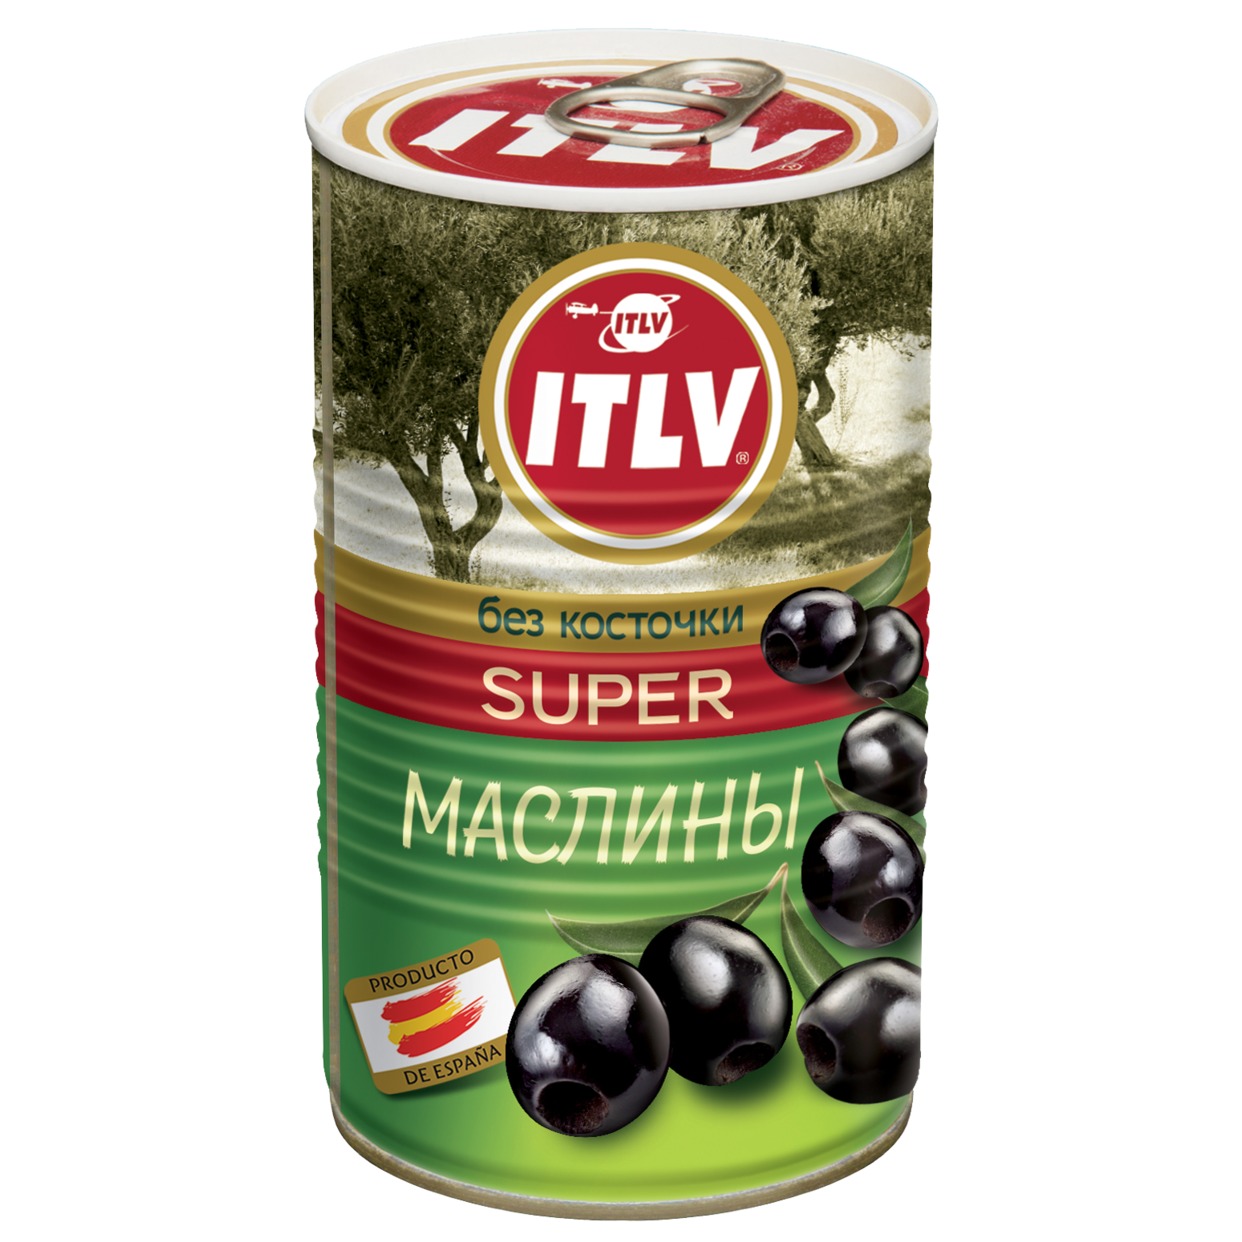 ITLV МаслиныСУП.чер.б/к ж/б350г